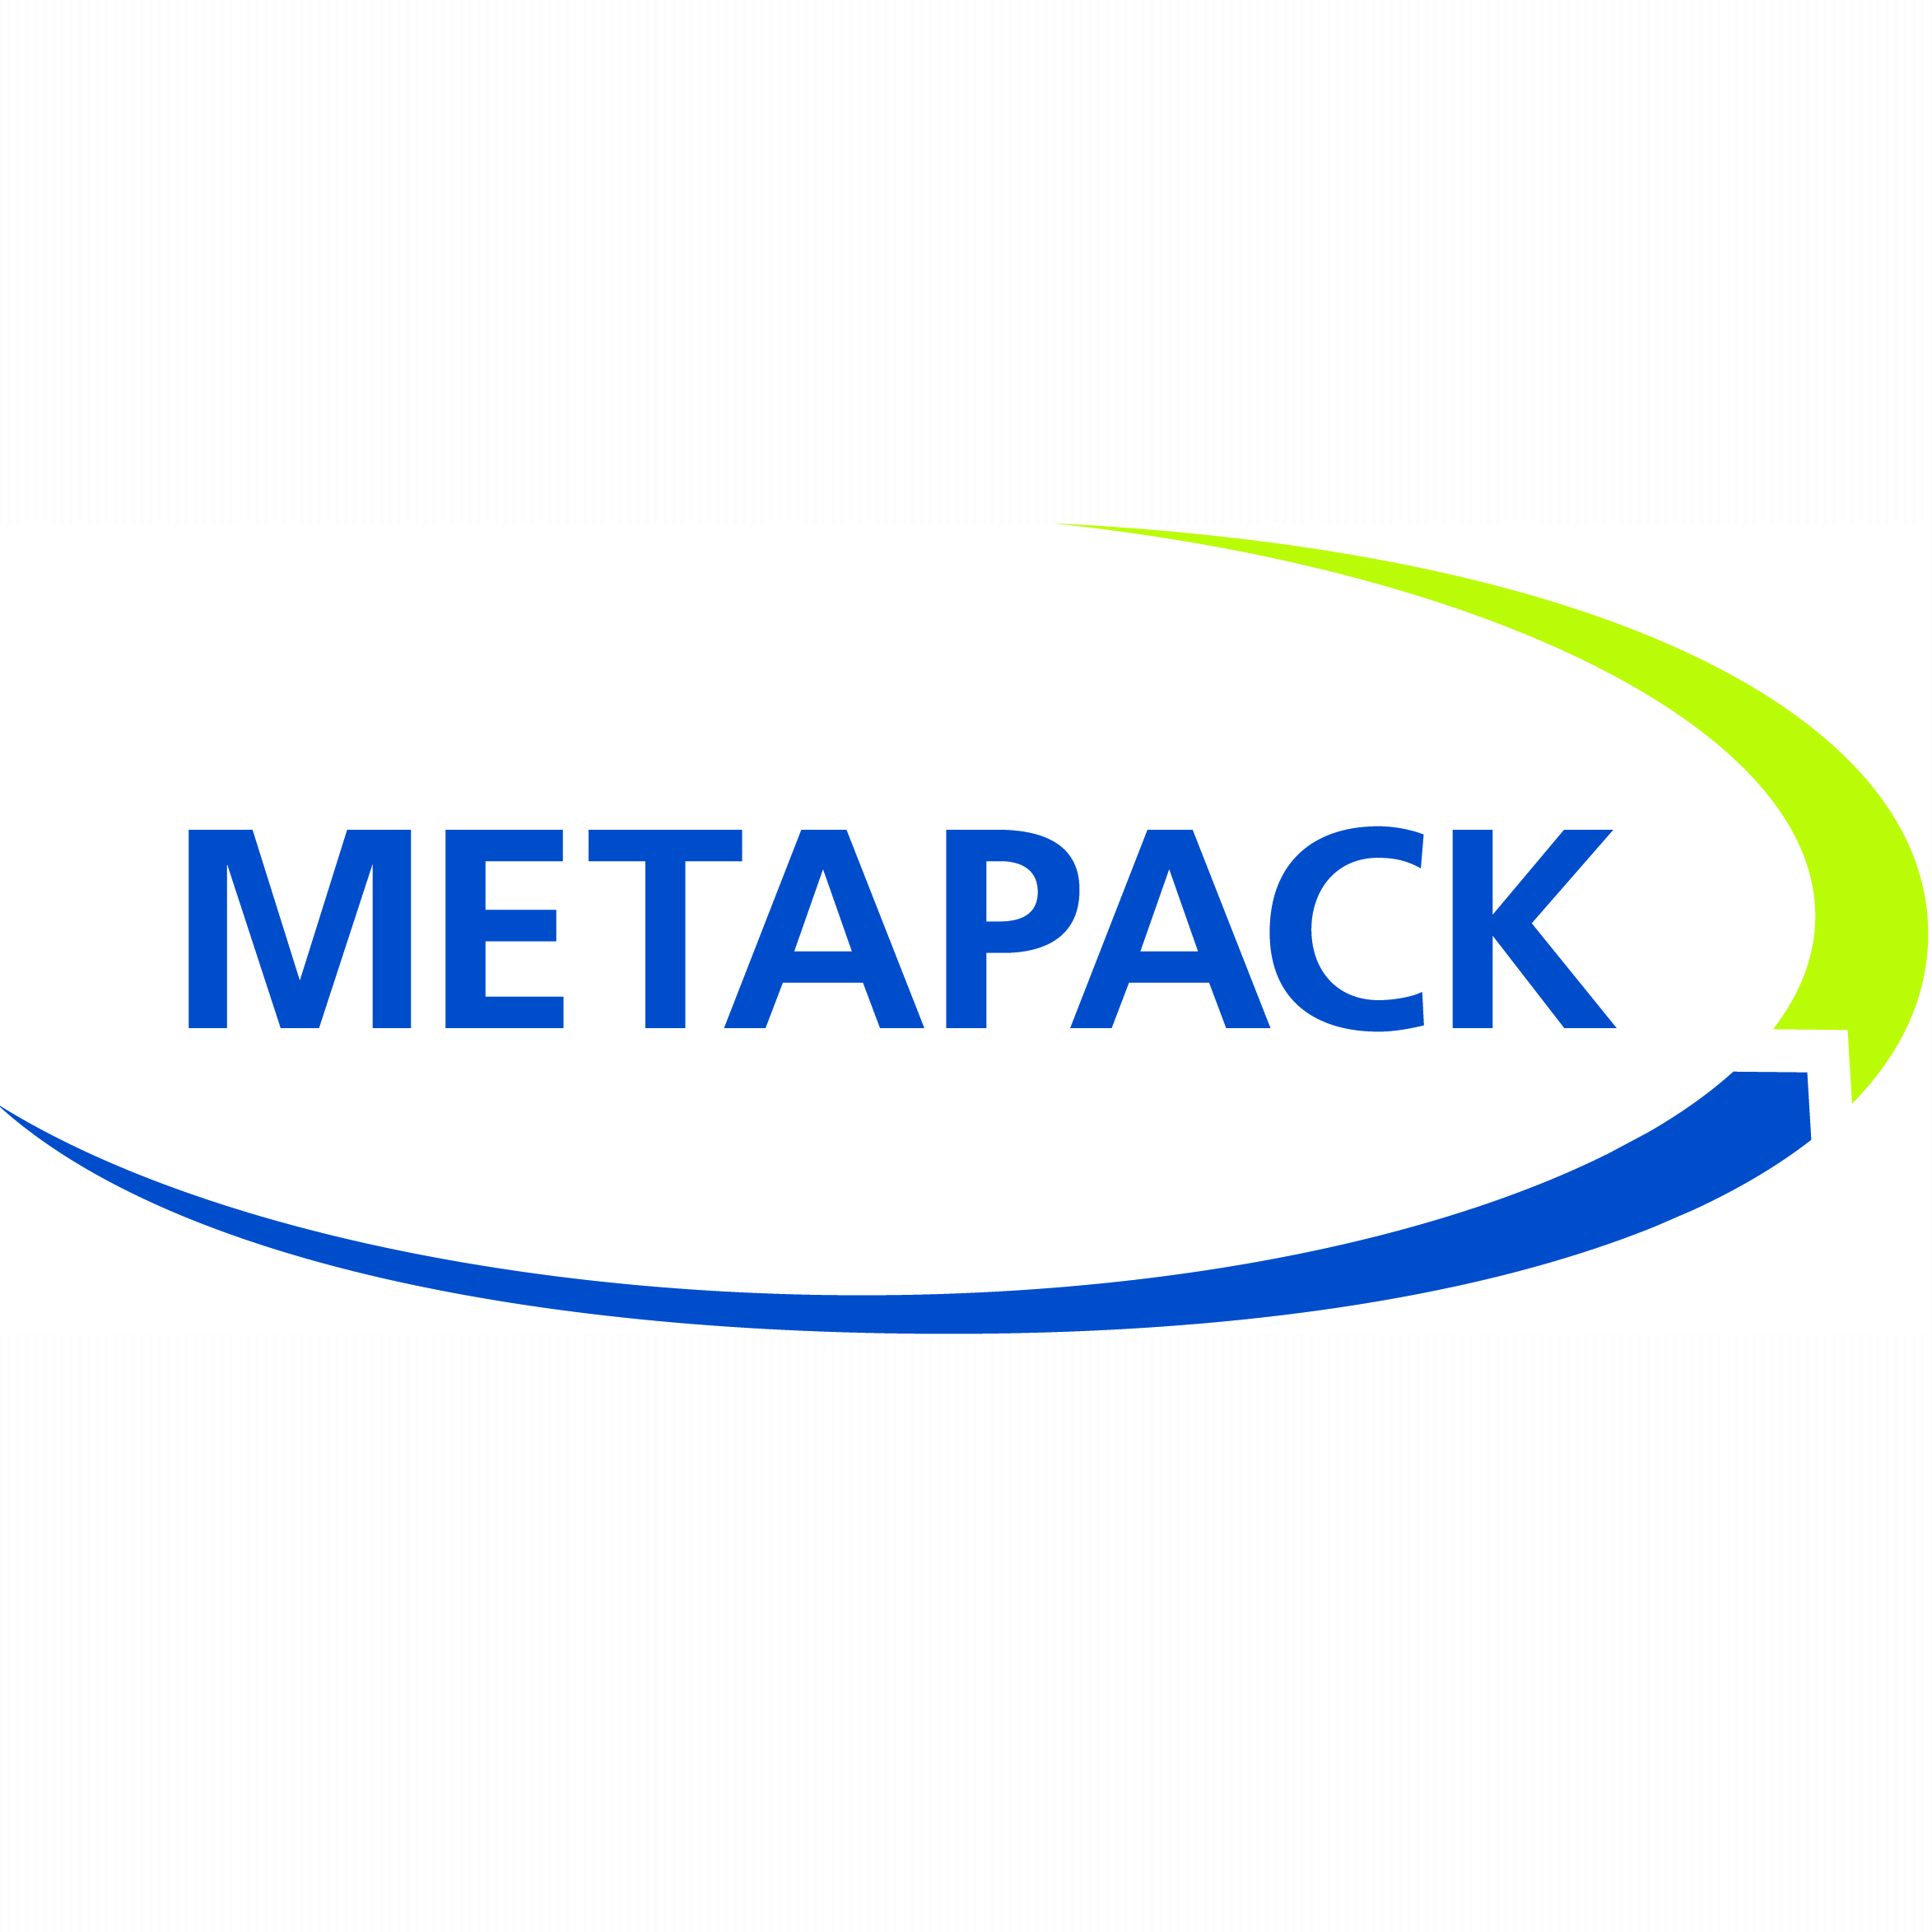 Metapack Manager